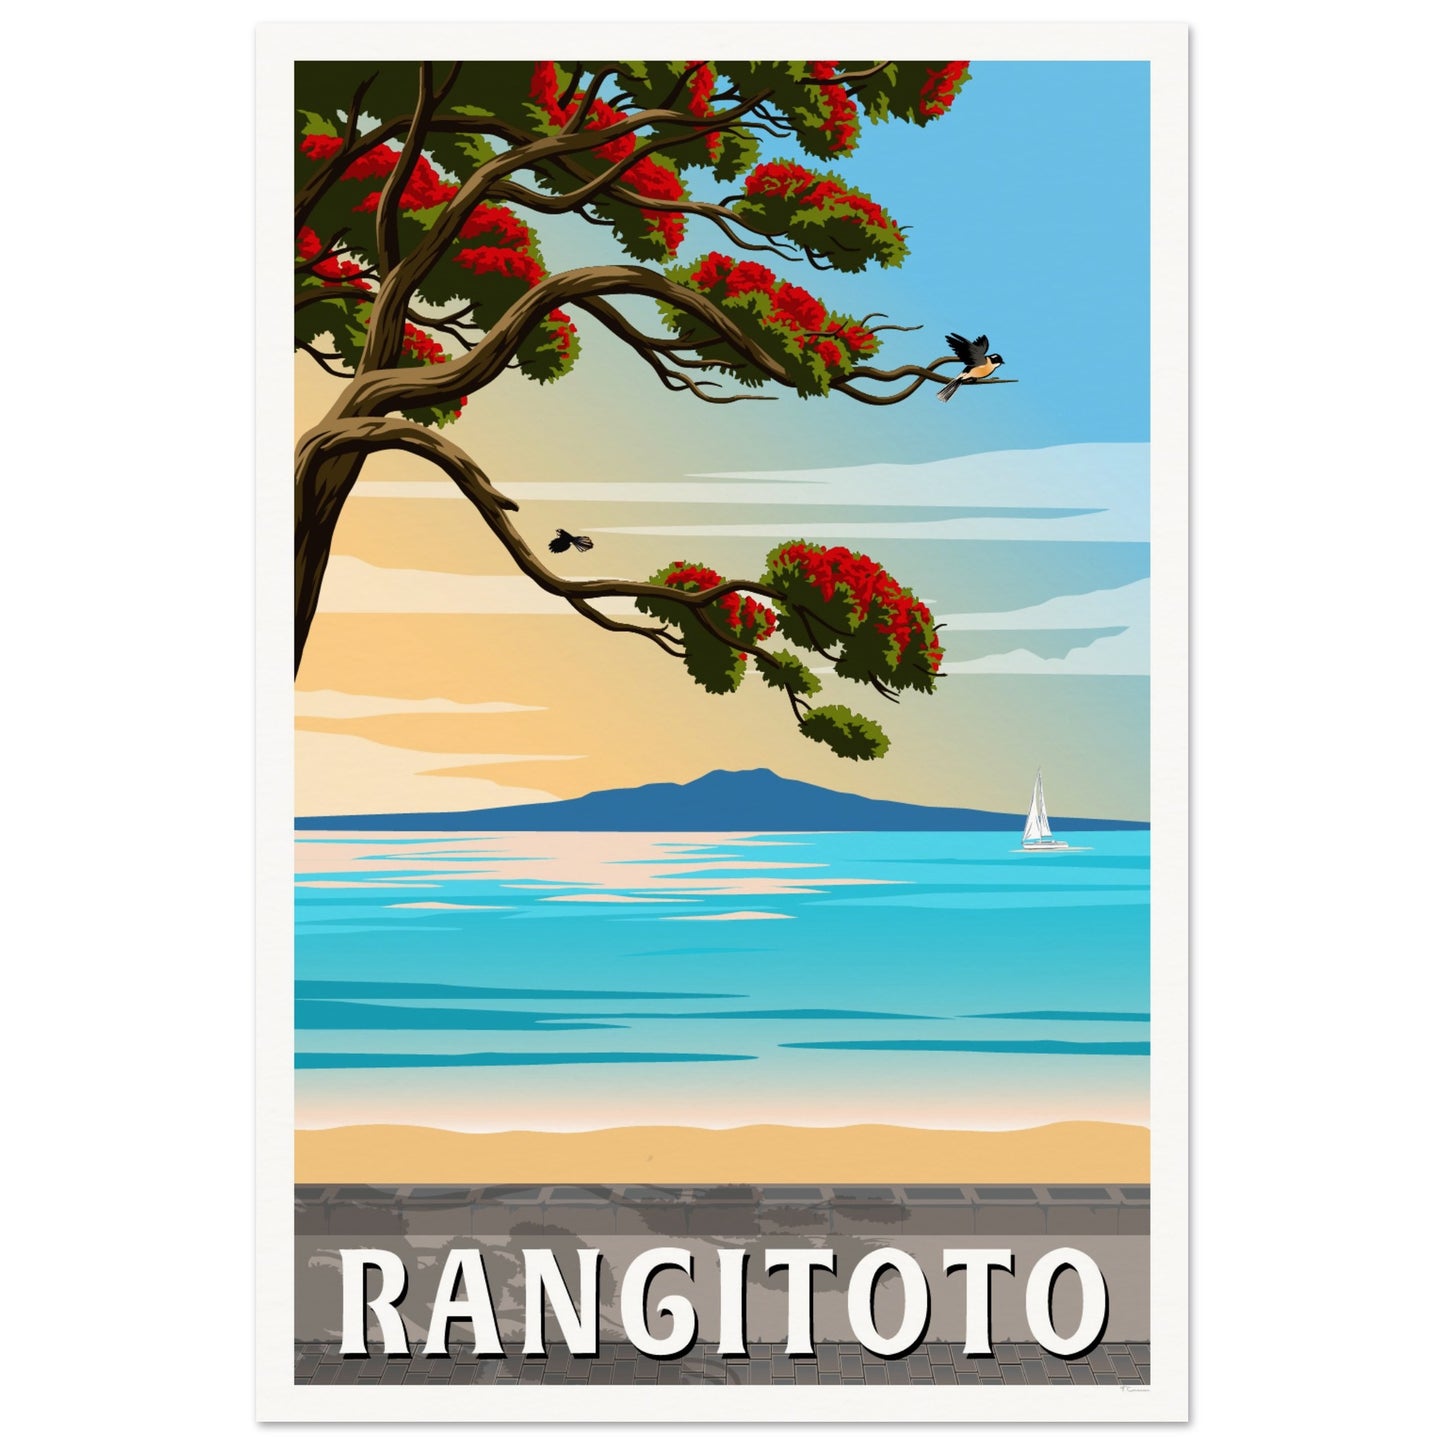 Rangitoto Travel Poster, New Zealand